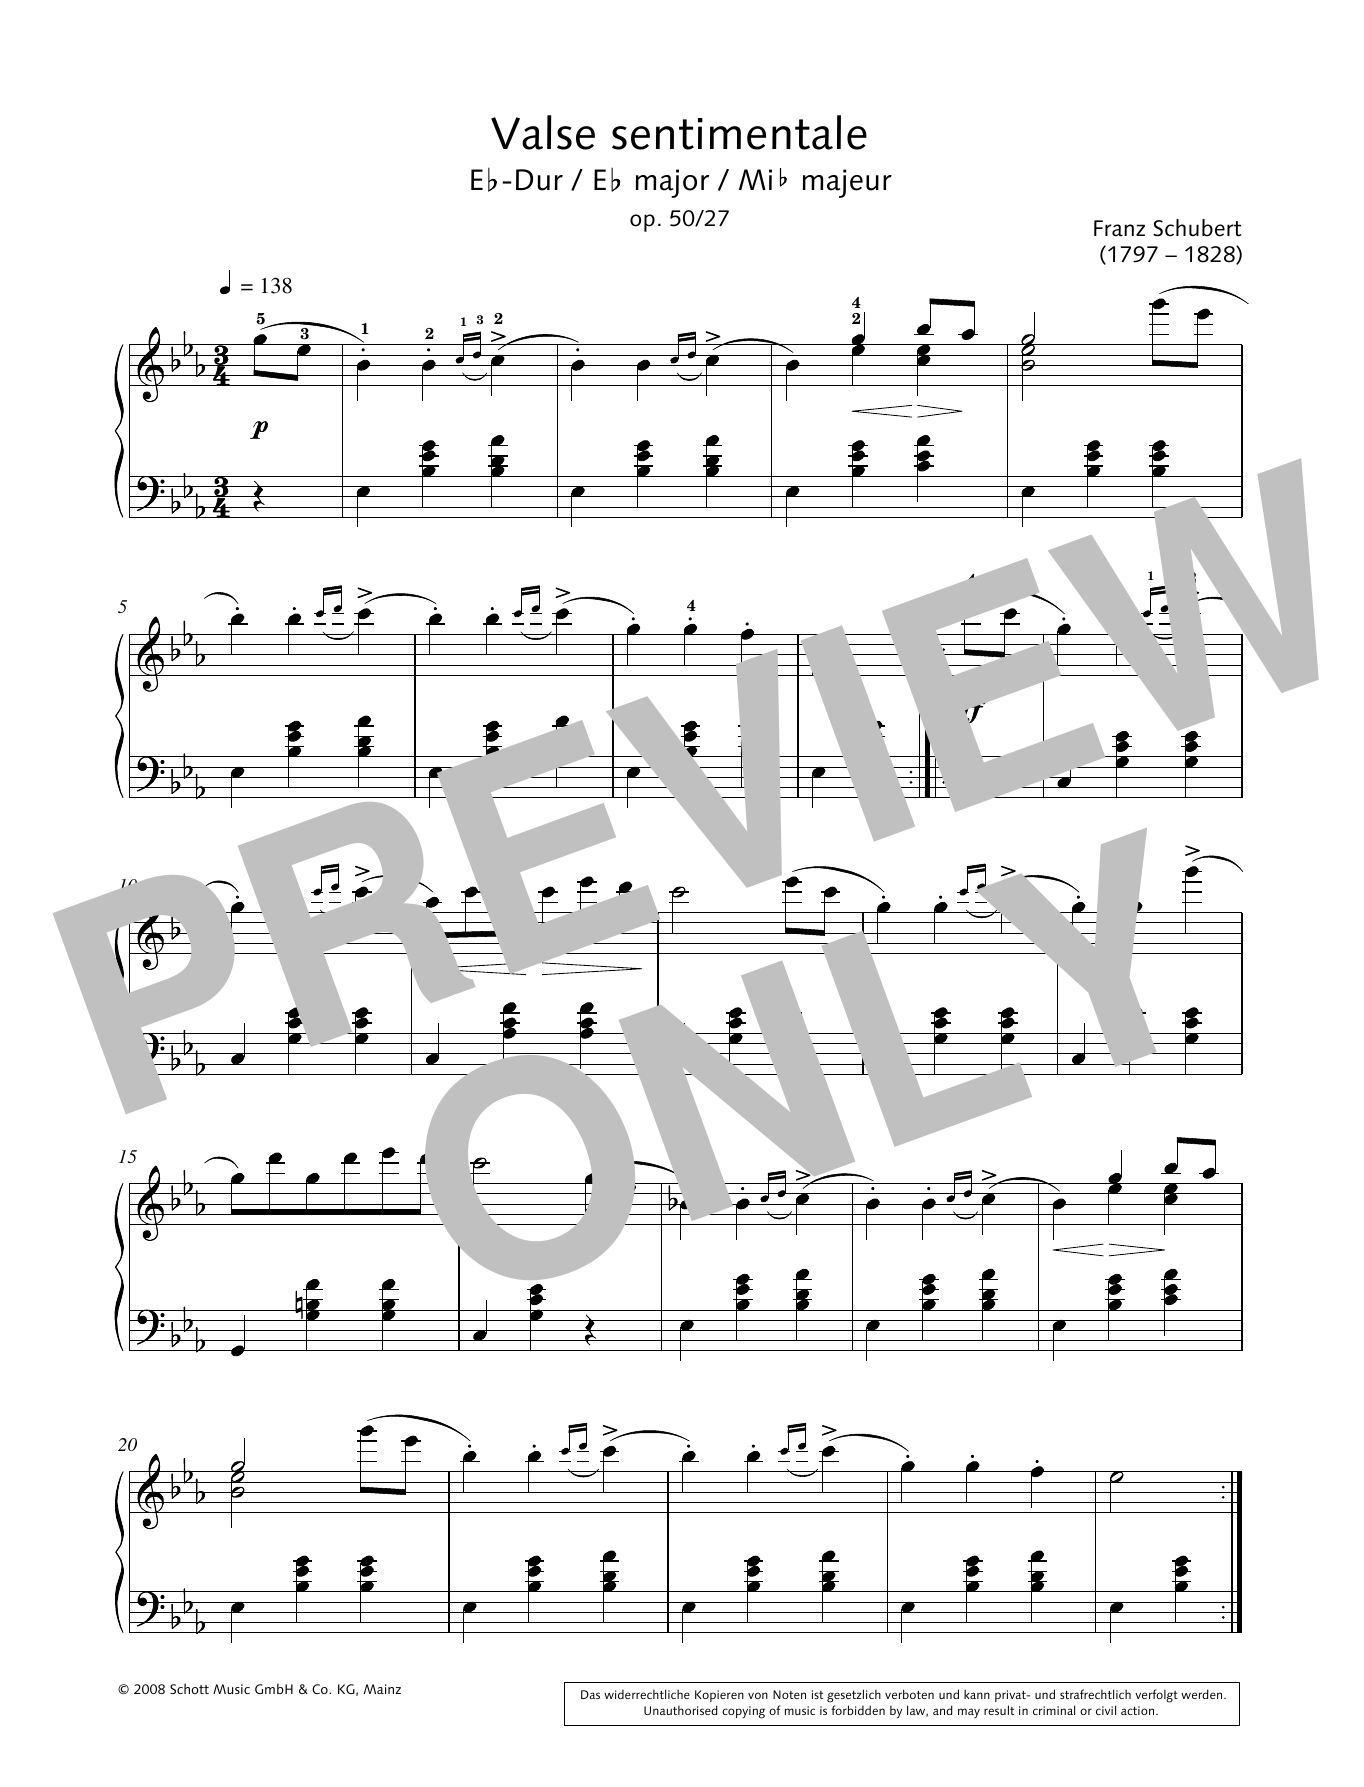 Hans-Gunter Heumann Valse sentimentale in E-flat major Sheet Music Notes & Chords for Piano Solo - Download or Print PDF